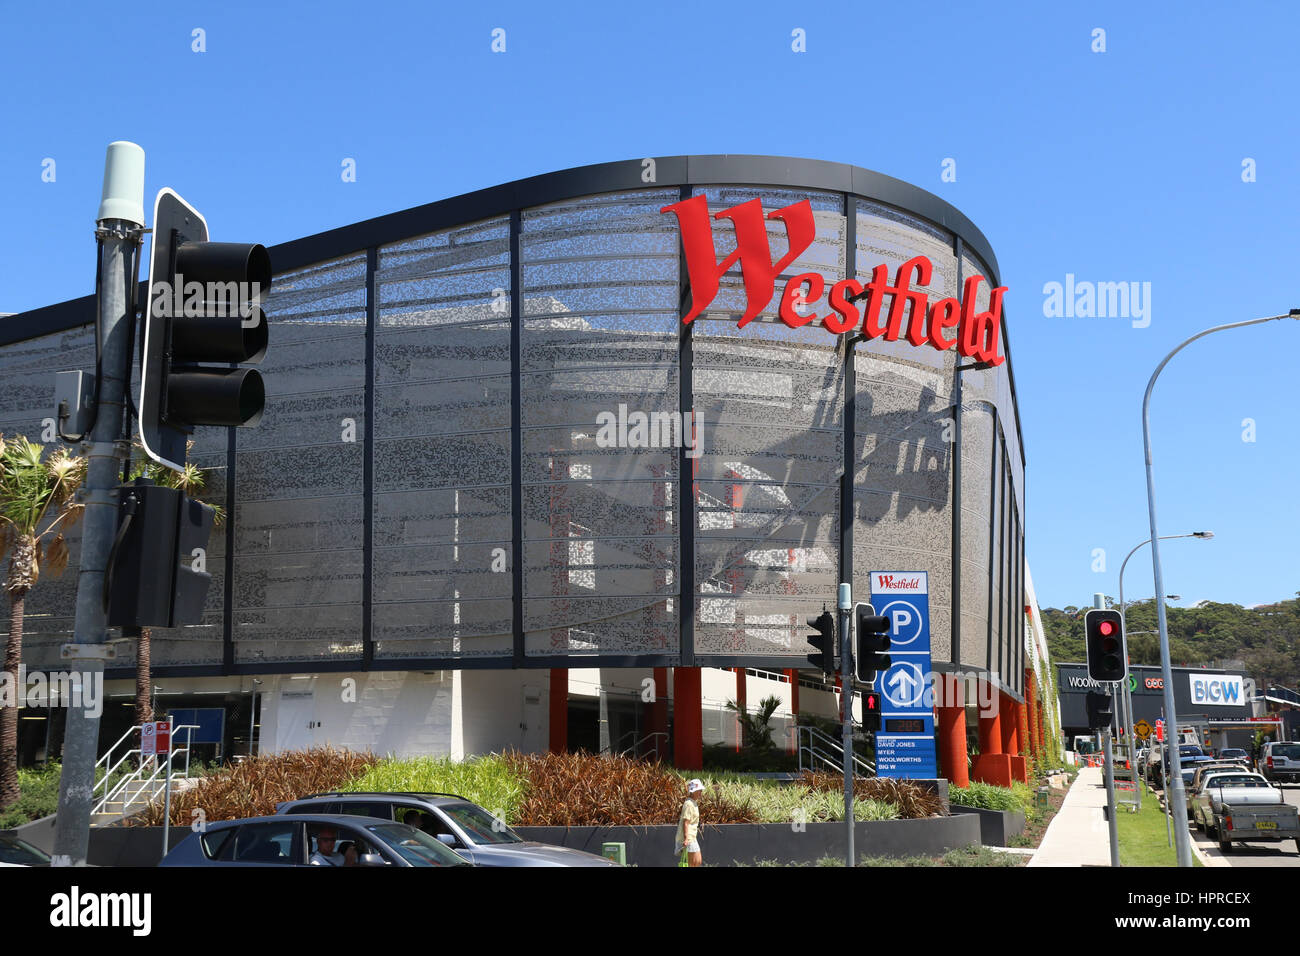 Big W department store in Sydney's warringah mall,australia Stock Photo -  Alamy